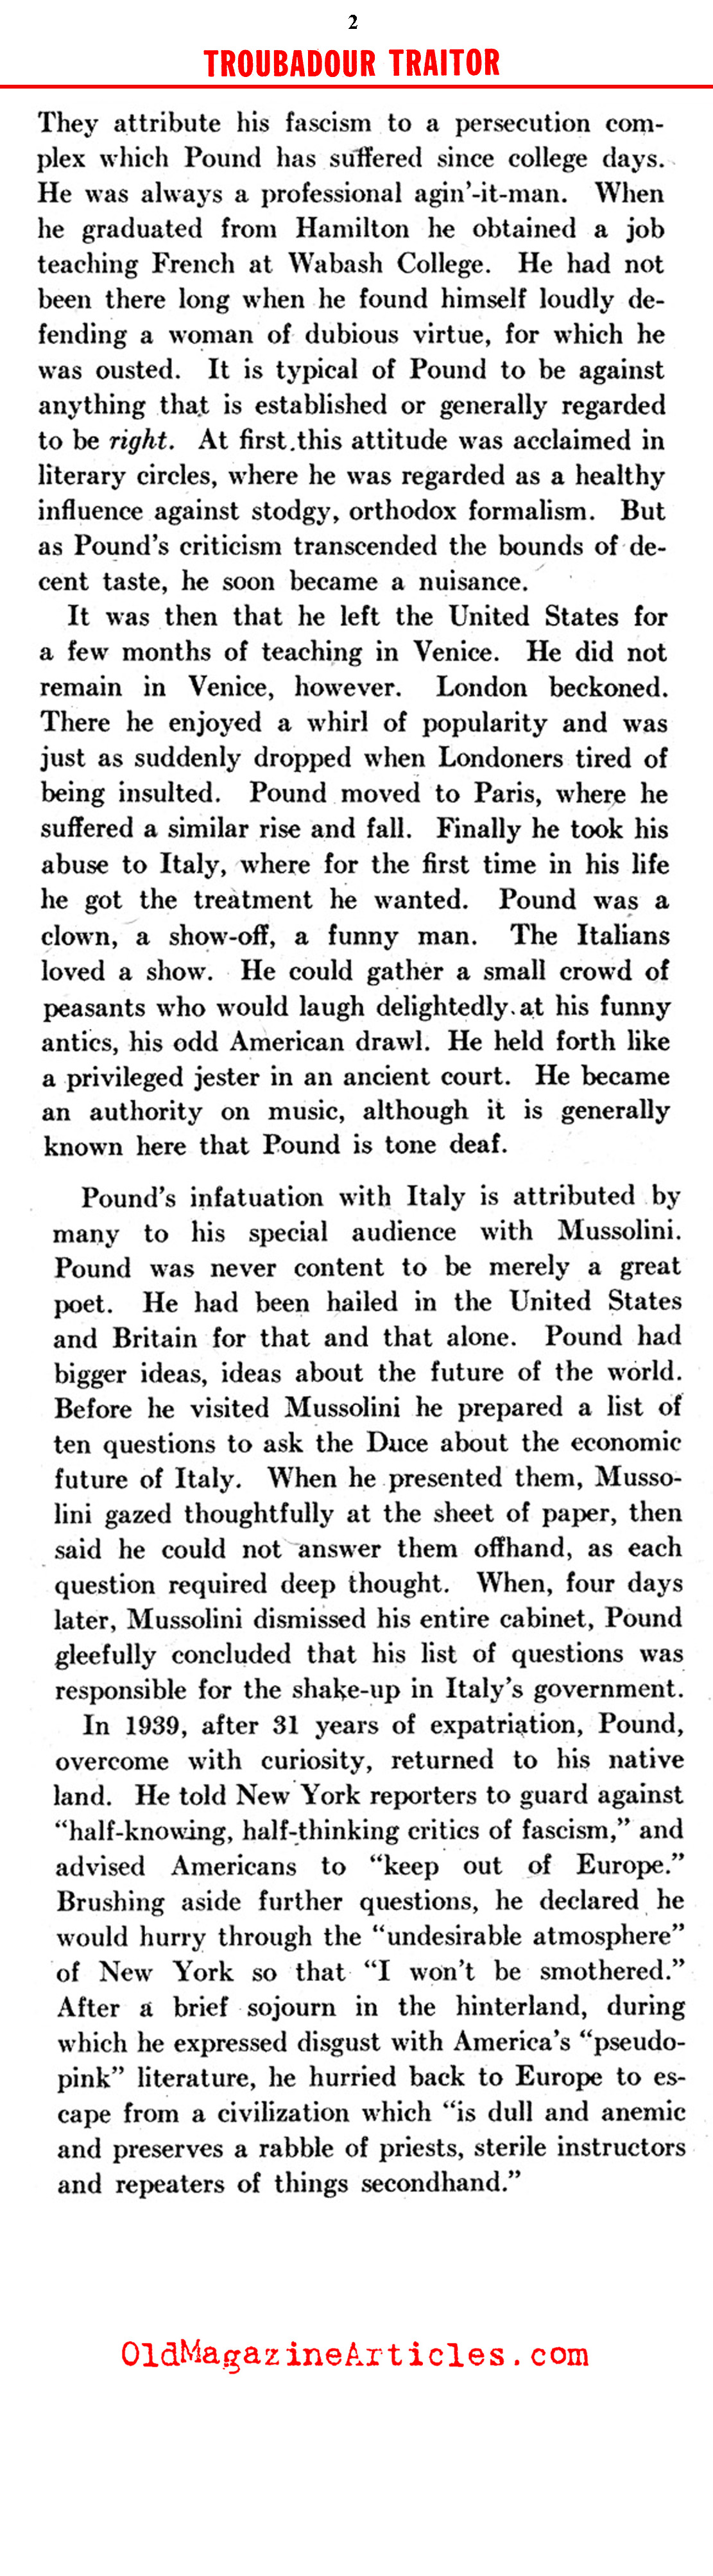 Ezra Pound of Indiana (Click Magazine, 1942)